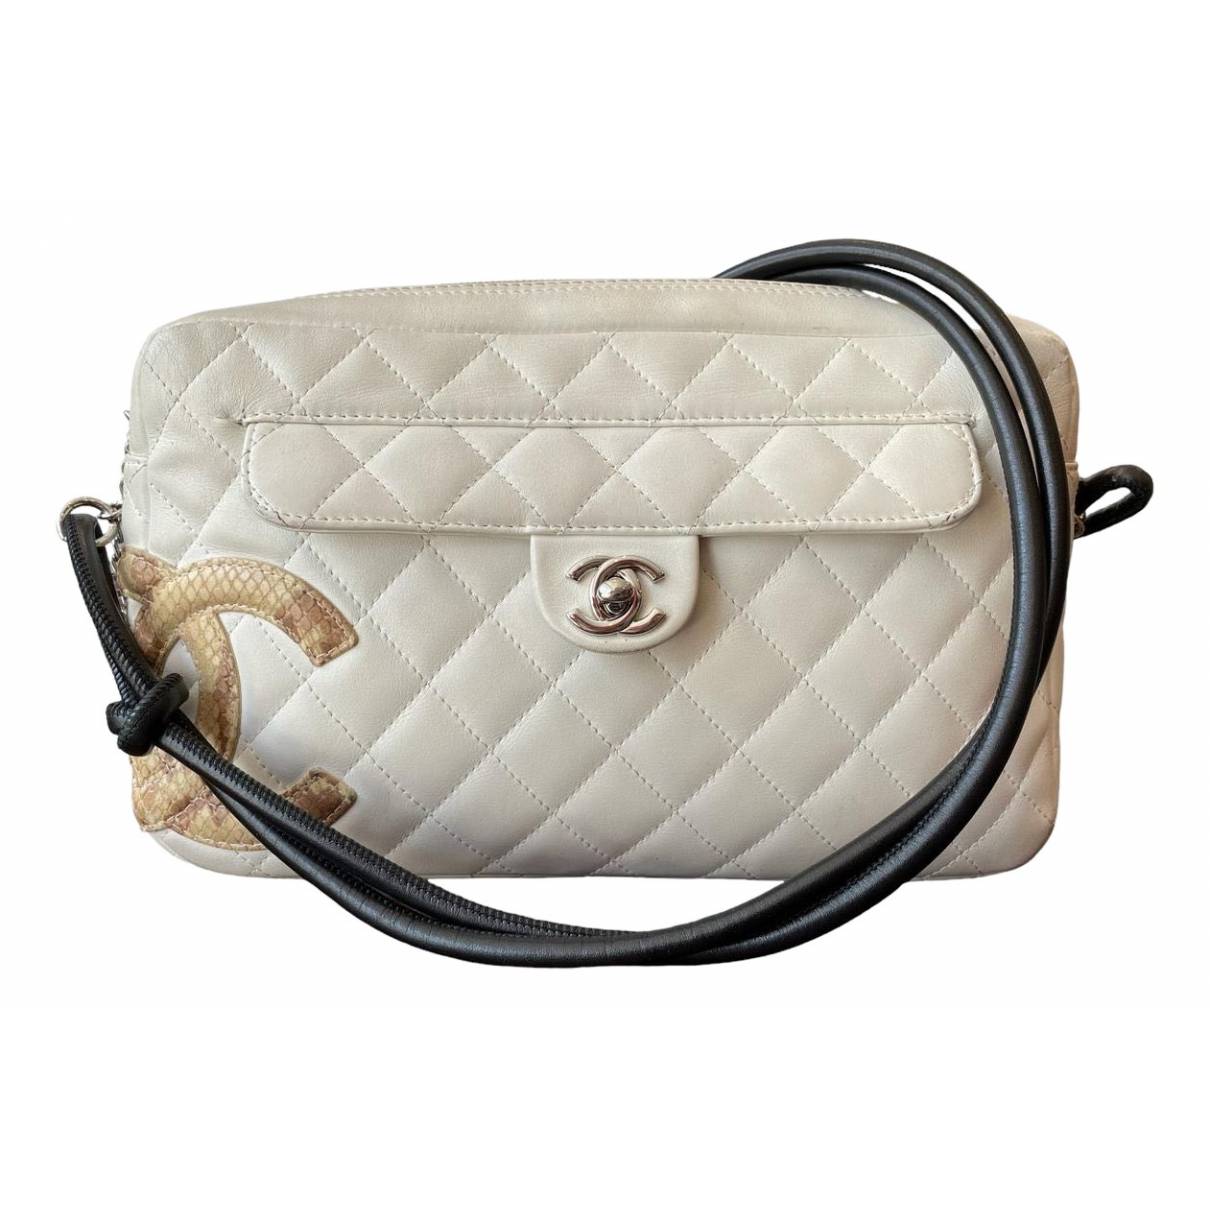 Vintage Chanel Paris Brown Quilted Leather CC Flap Shoulder Bag